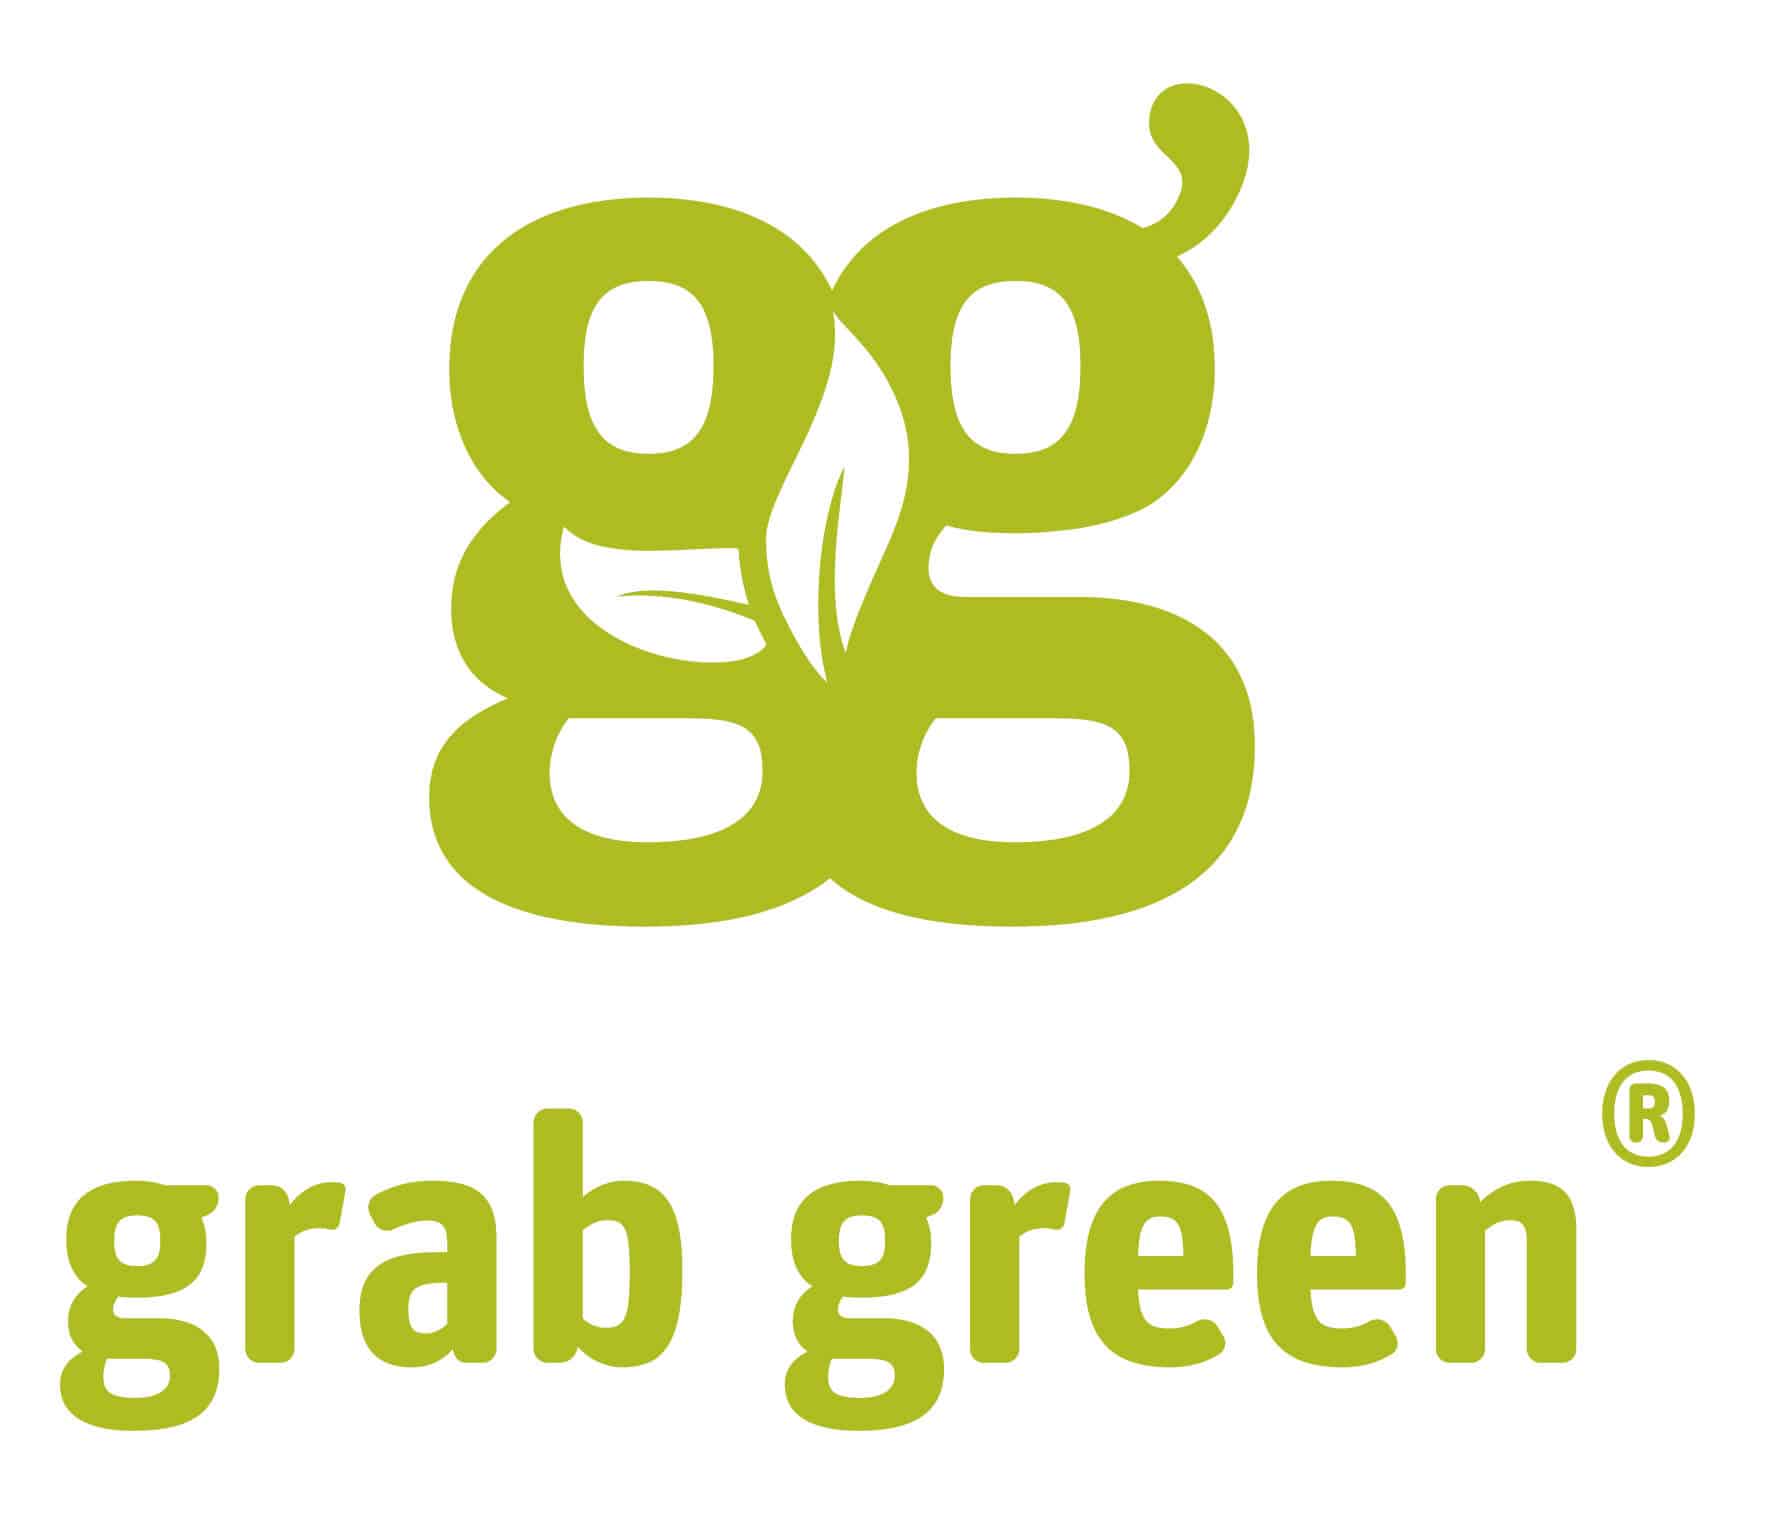 Grab Green